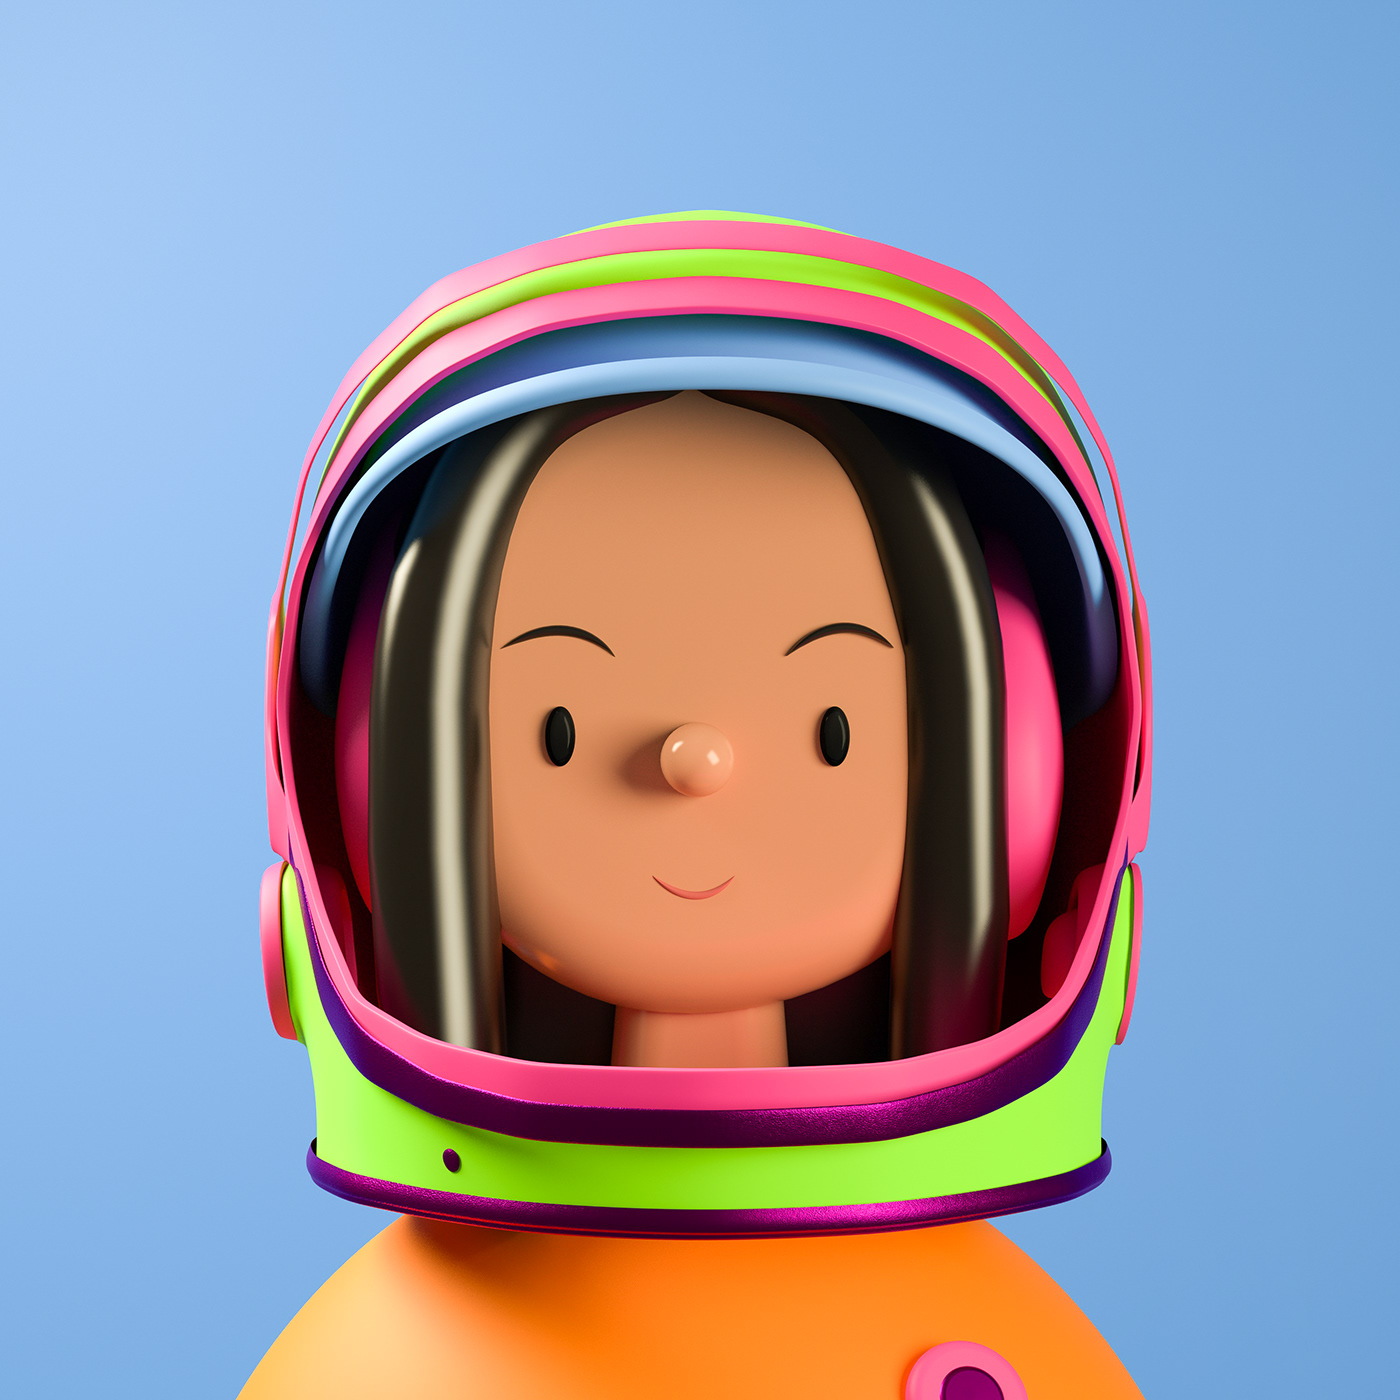 Toy Faces toys Character design  ILLUSTRATION  3D Digital Art  Pop Art art toys vinyl Amrit Pal Singh